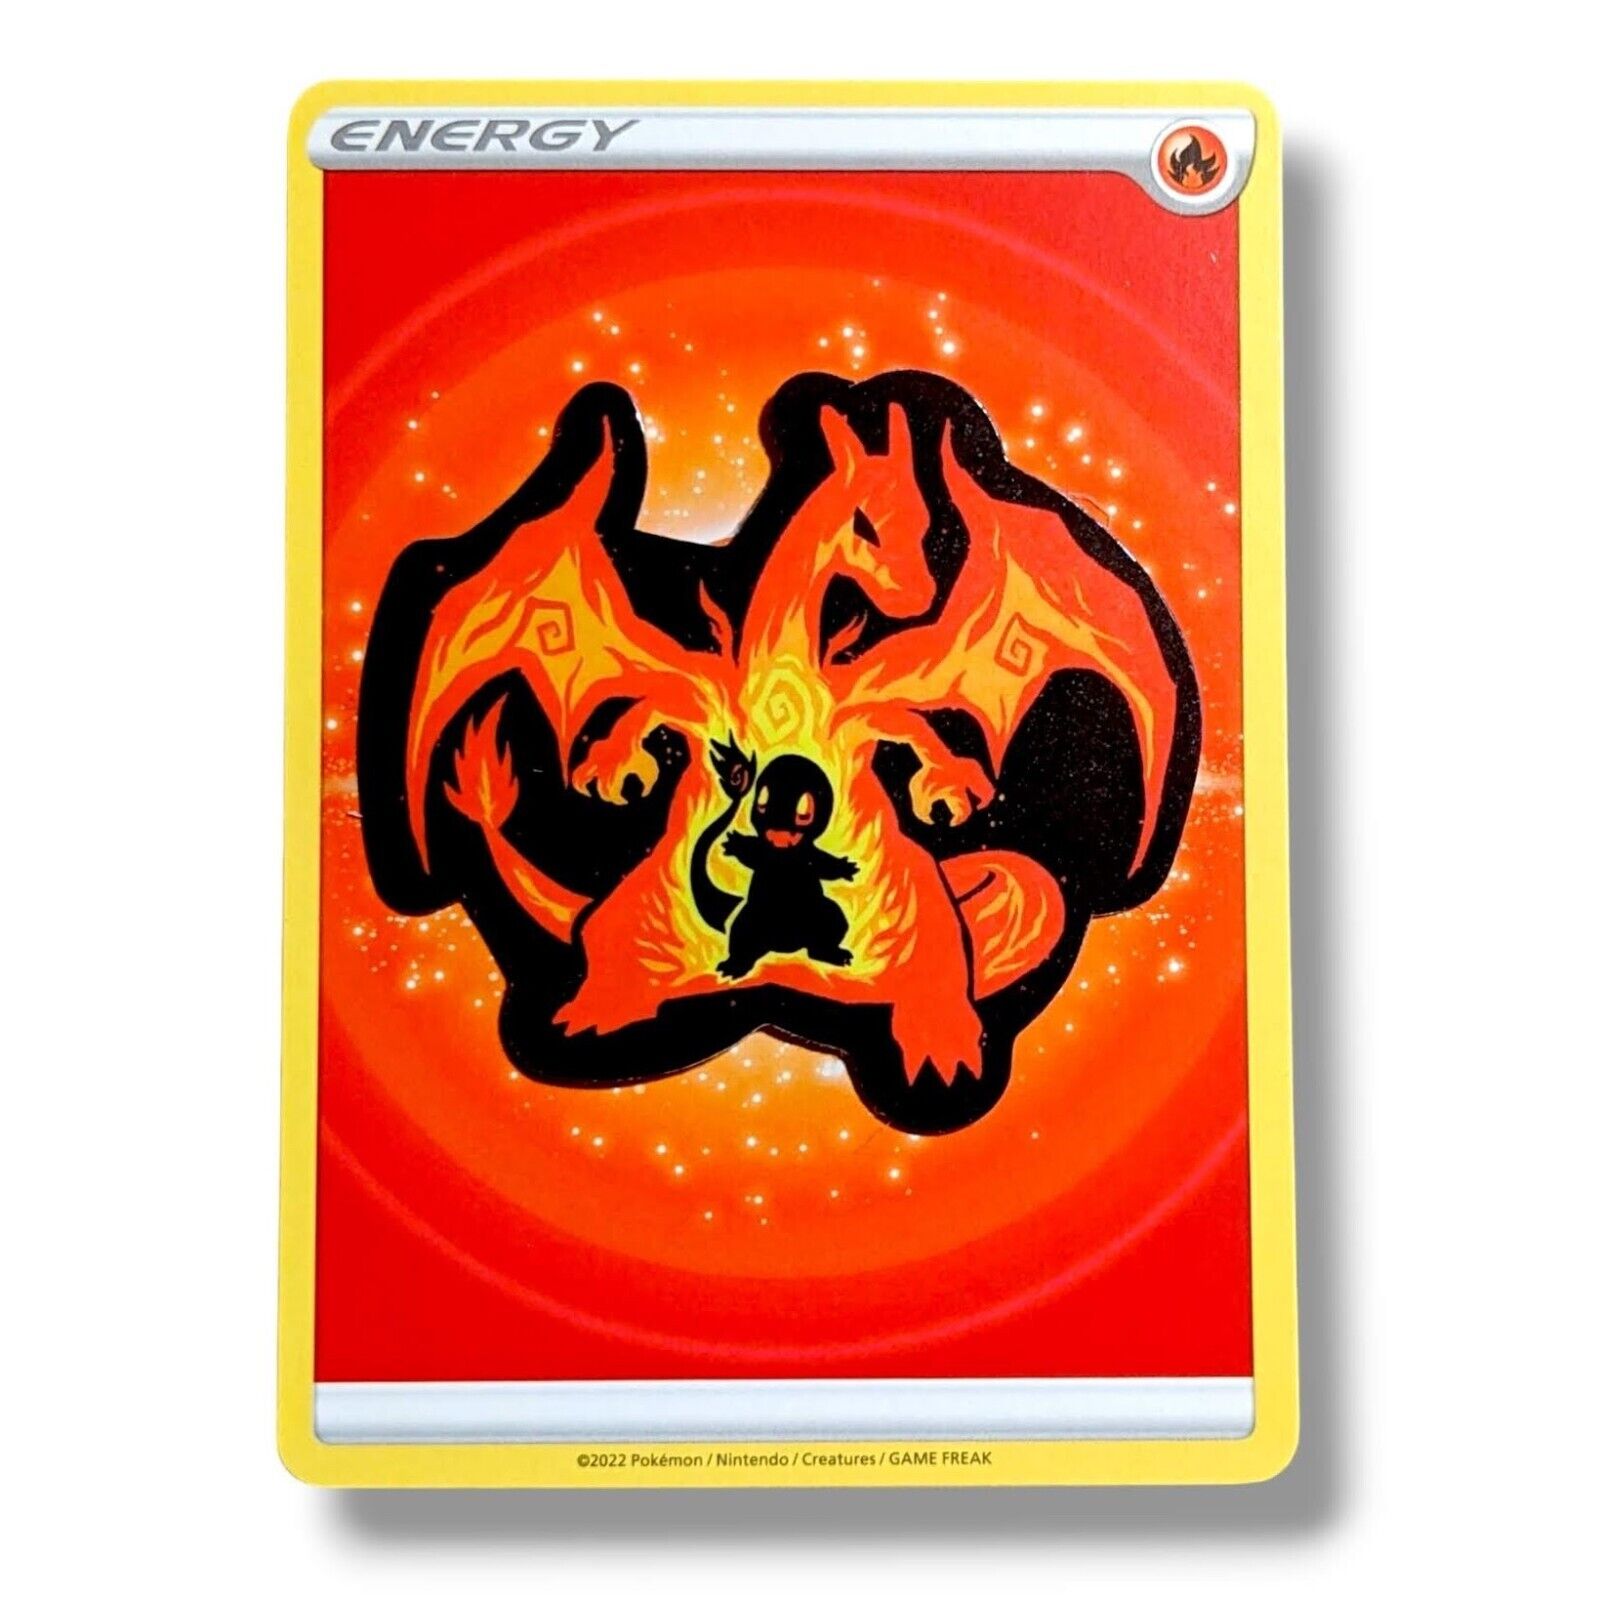 Fire Pokemon Card and Neon Charmander and Charizard Sticker, 1.75 in.